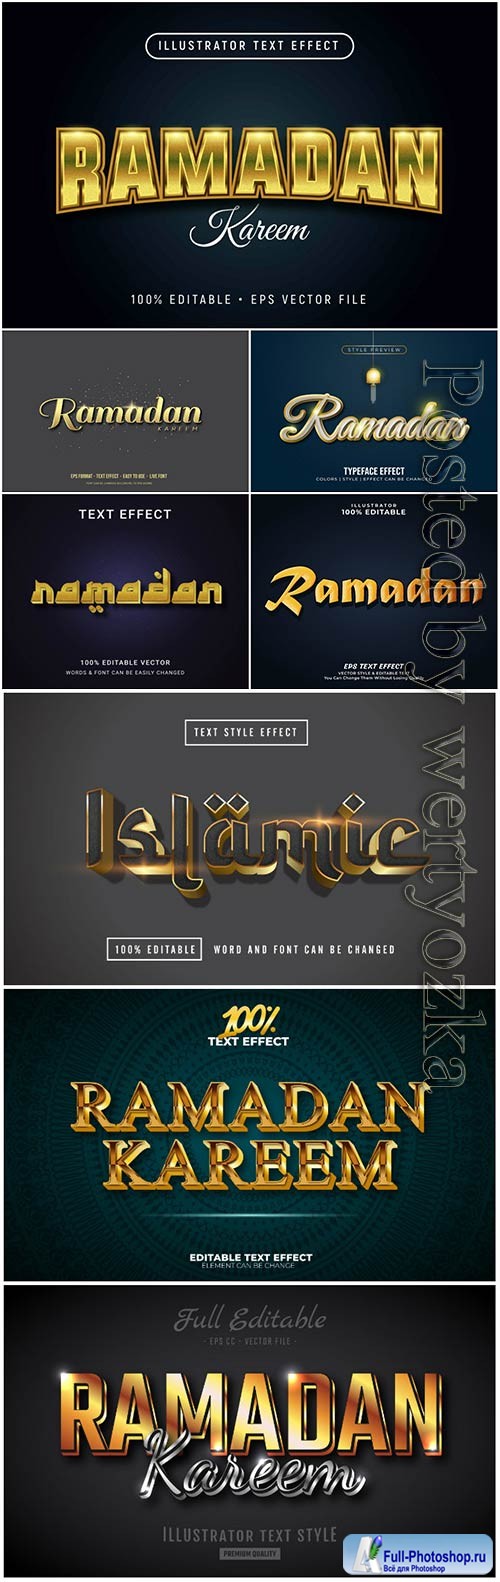 Ramadan vector text effect